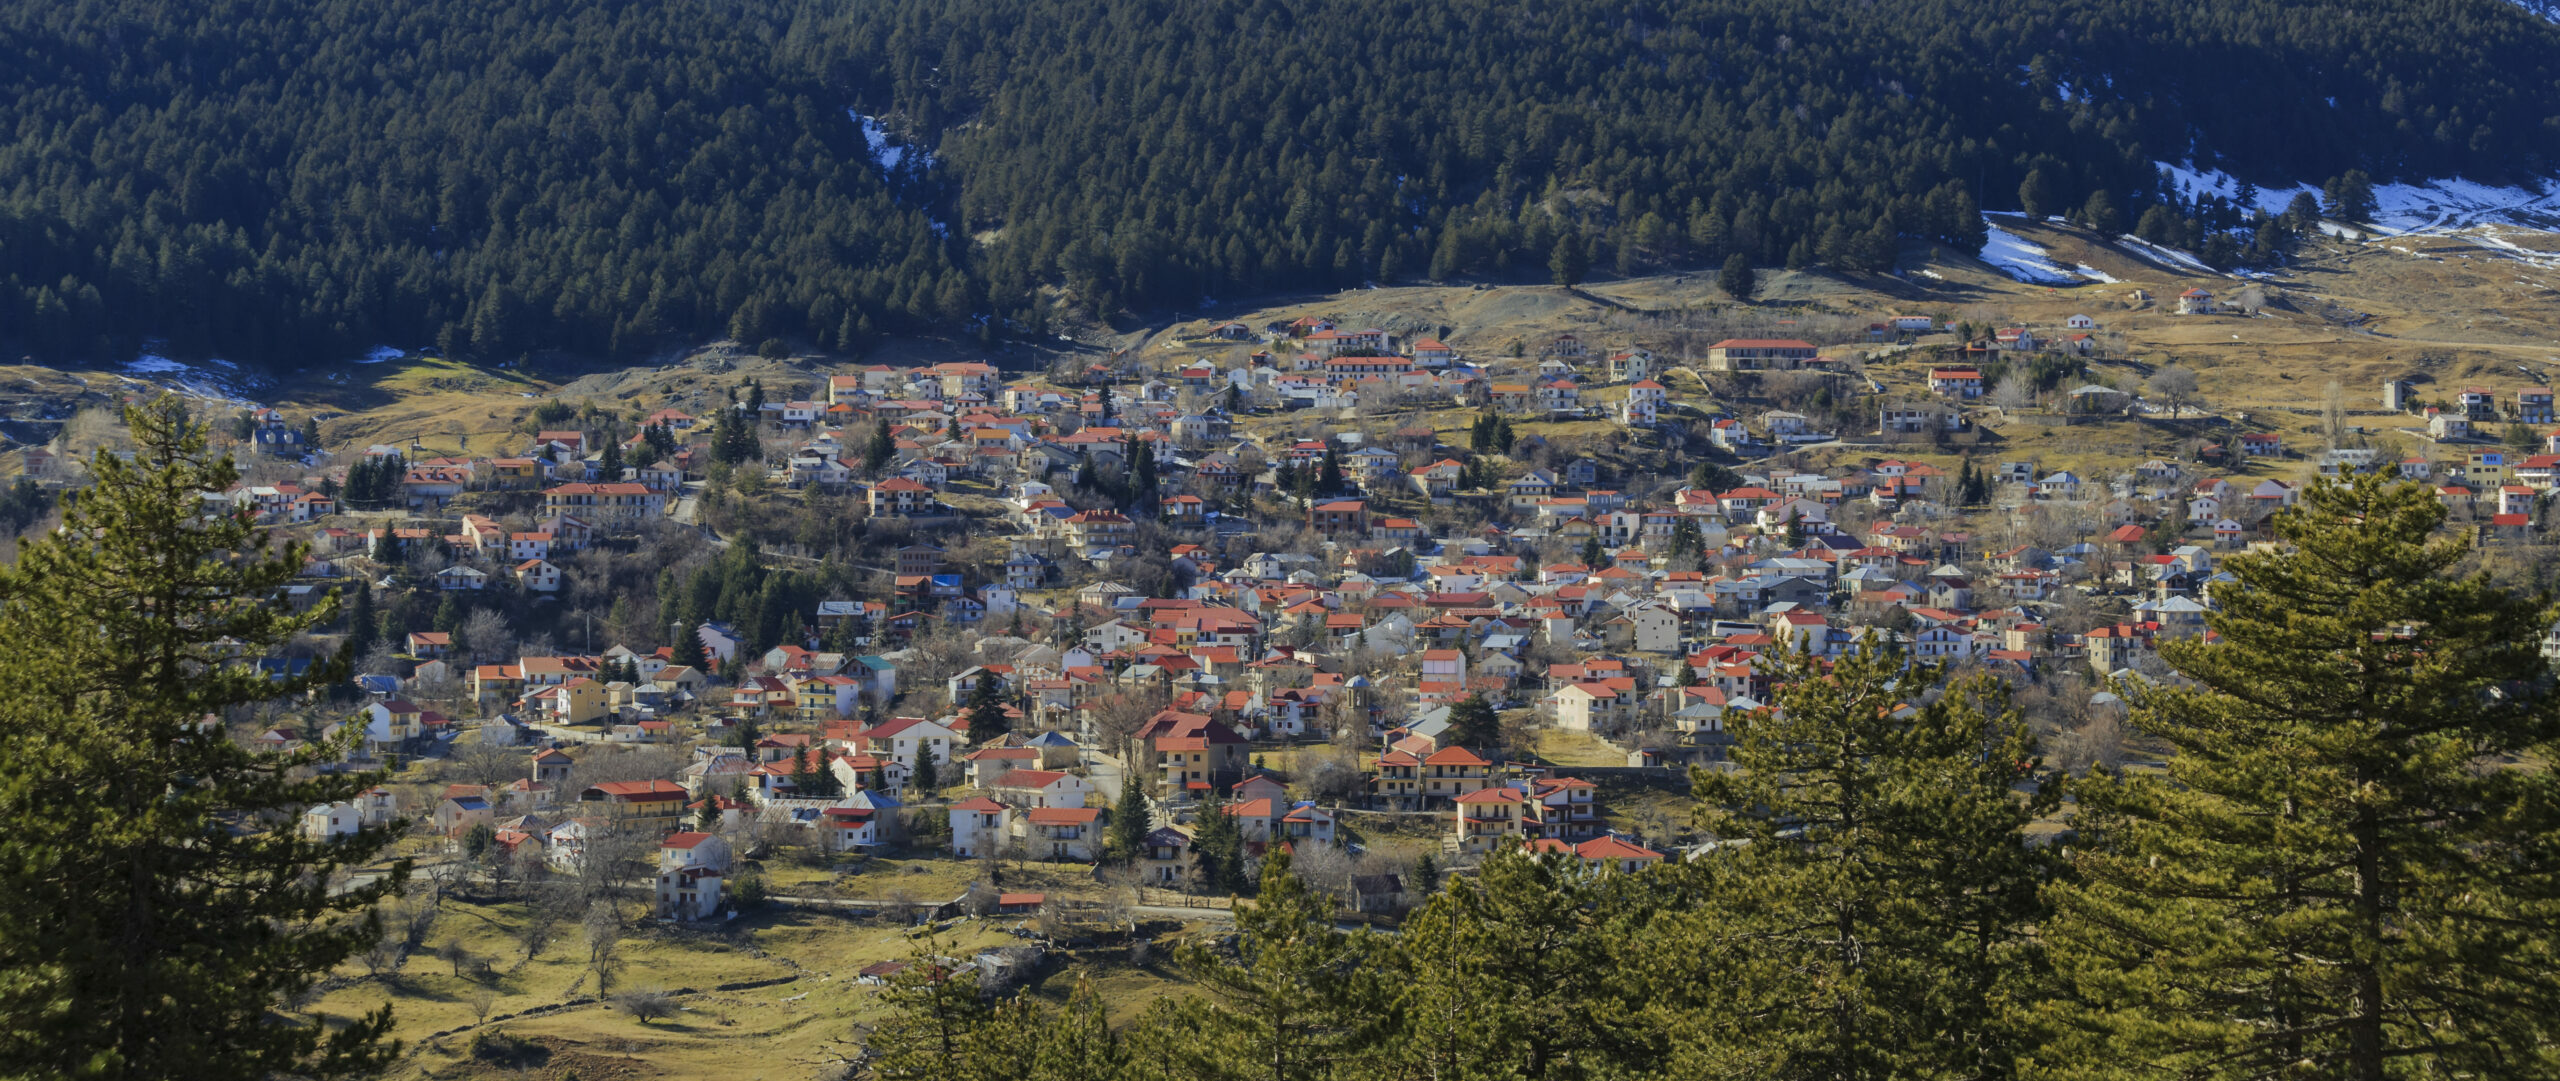 Samarina, the tallest Greek village in the Balkans